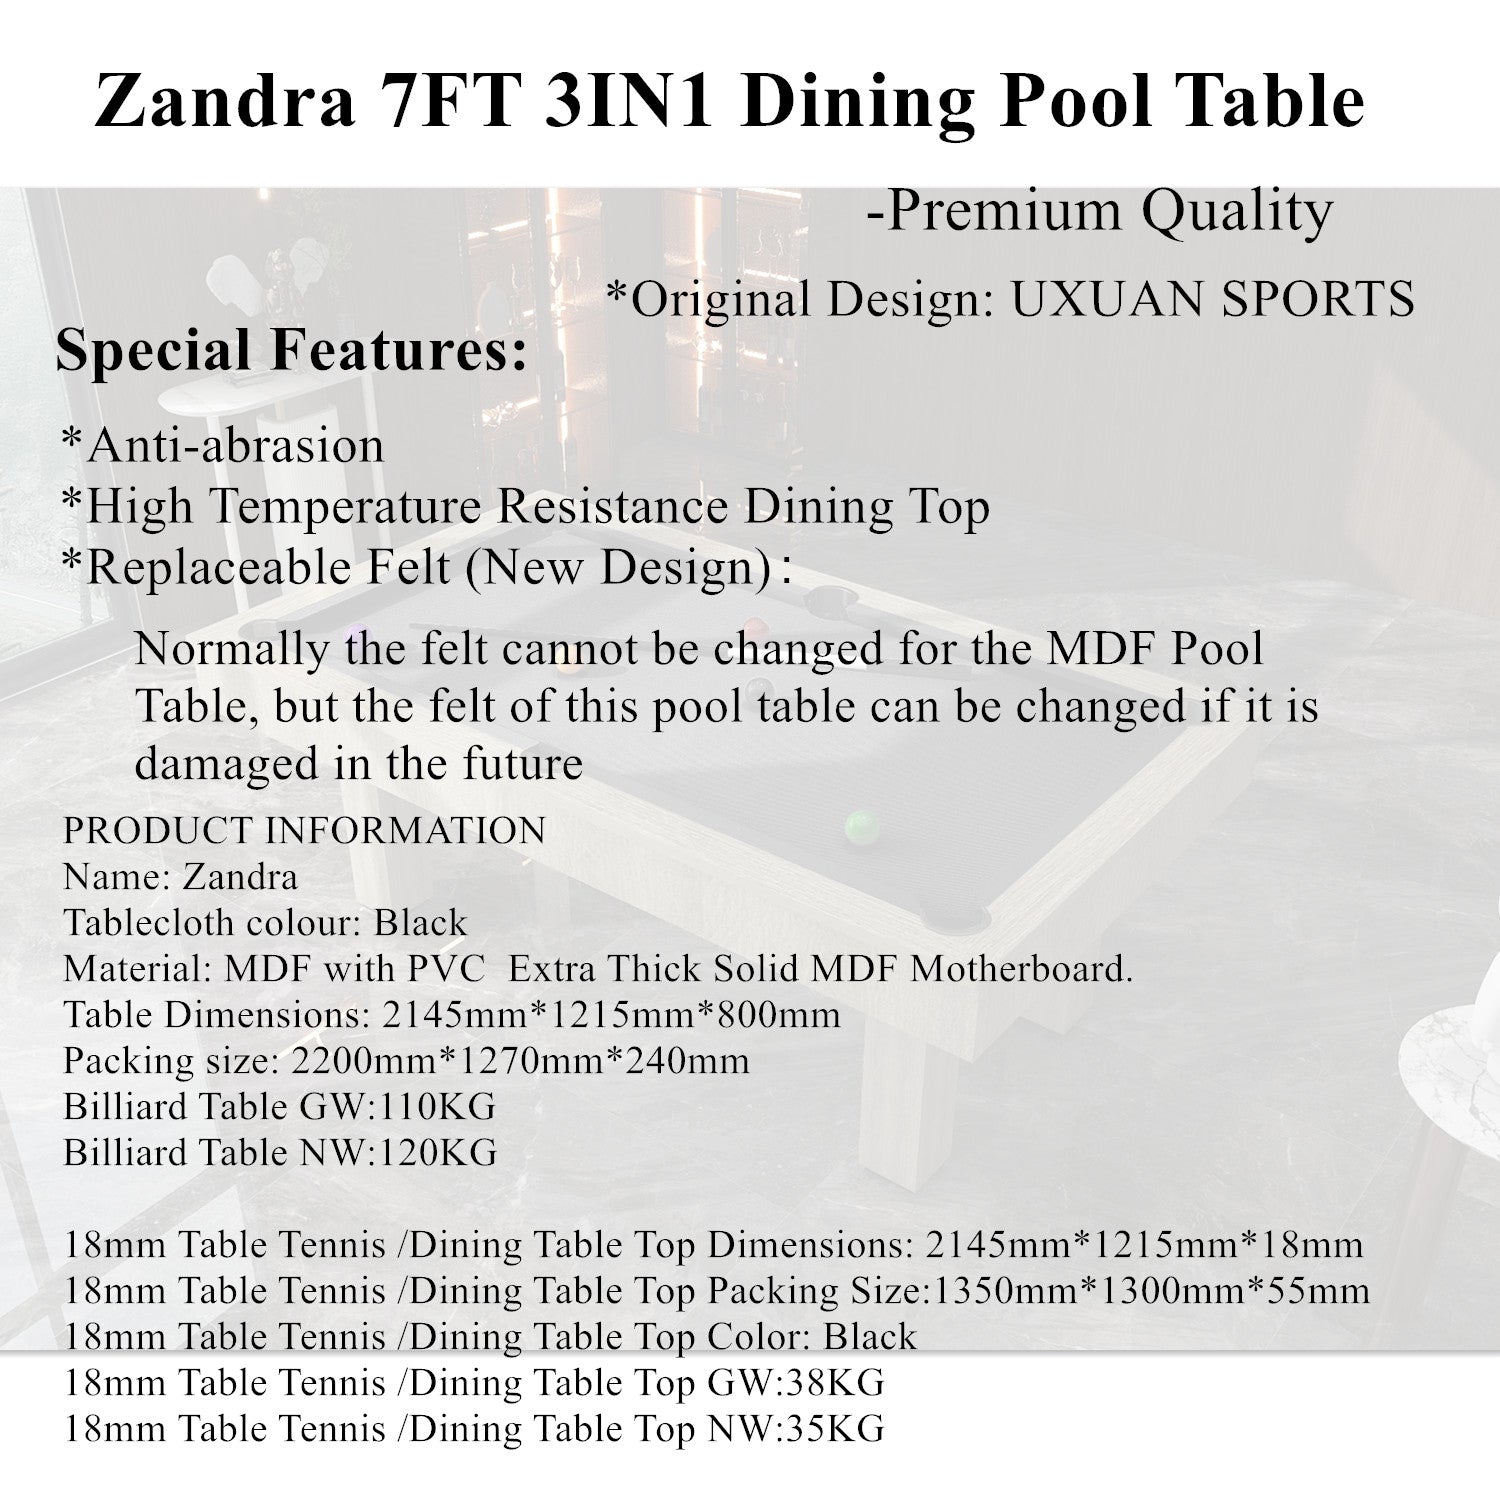 Zandra Dining Pool Table-3IN1 7FT